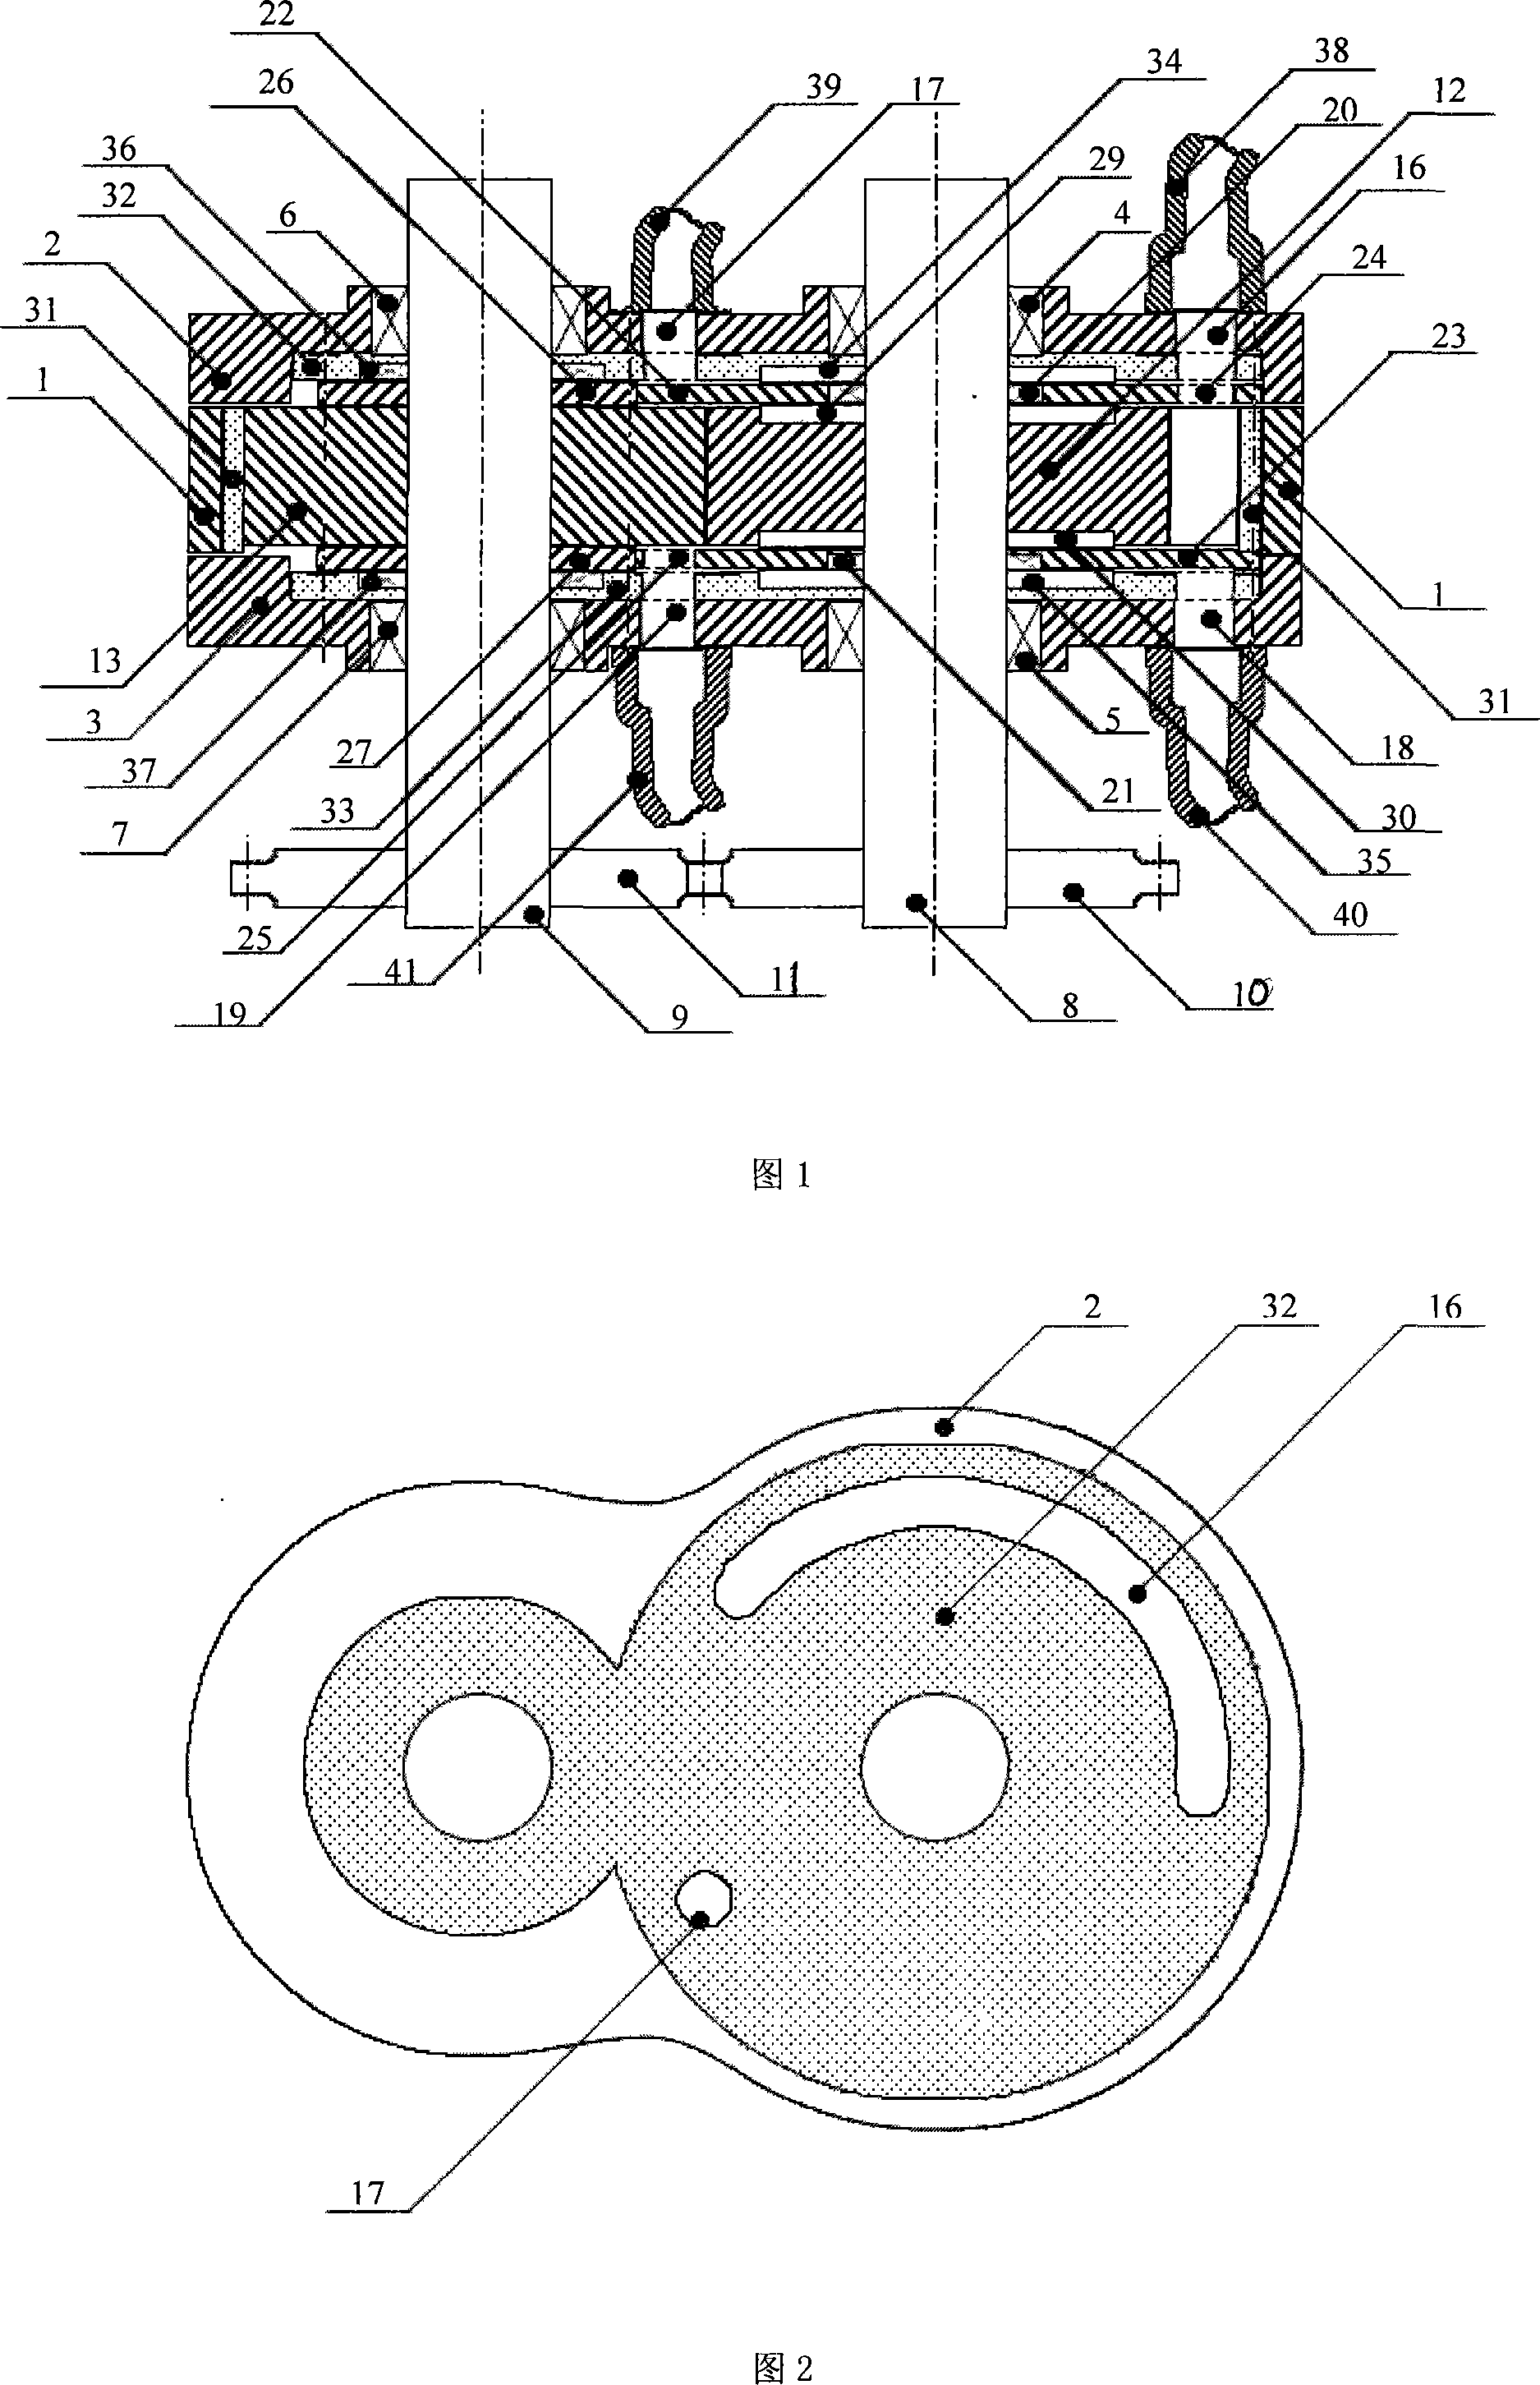 All-rotation engine